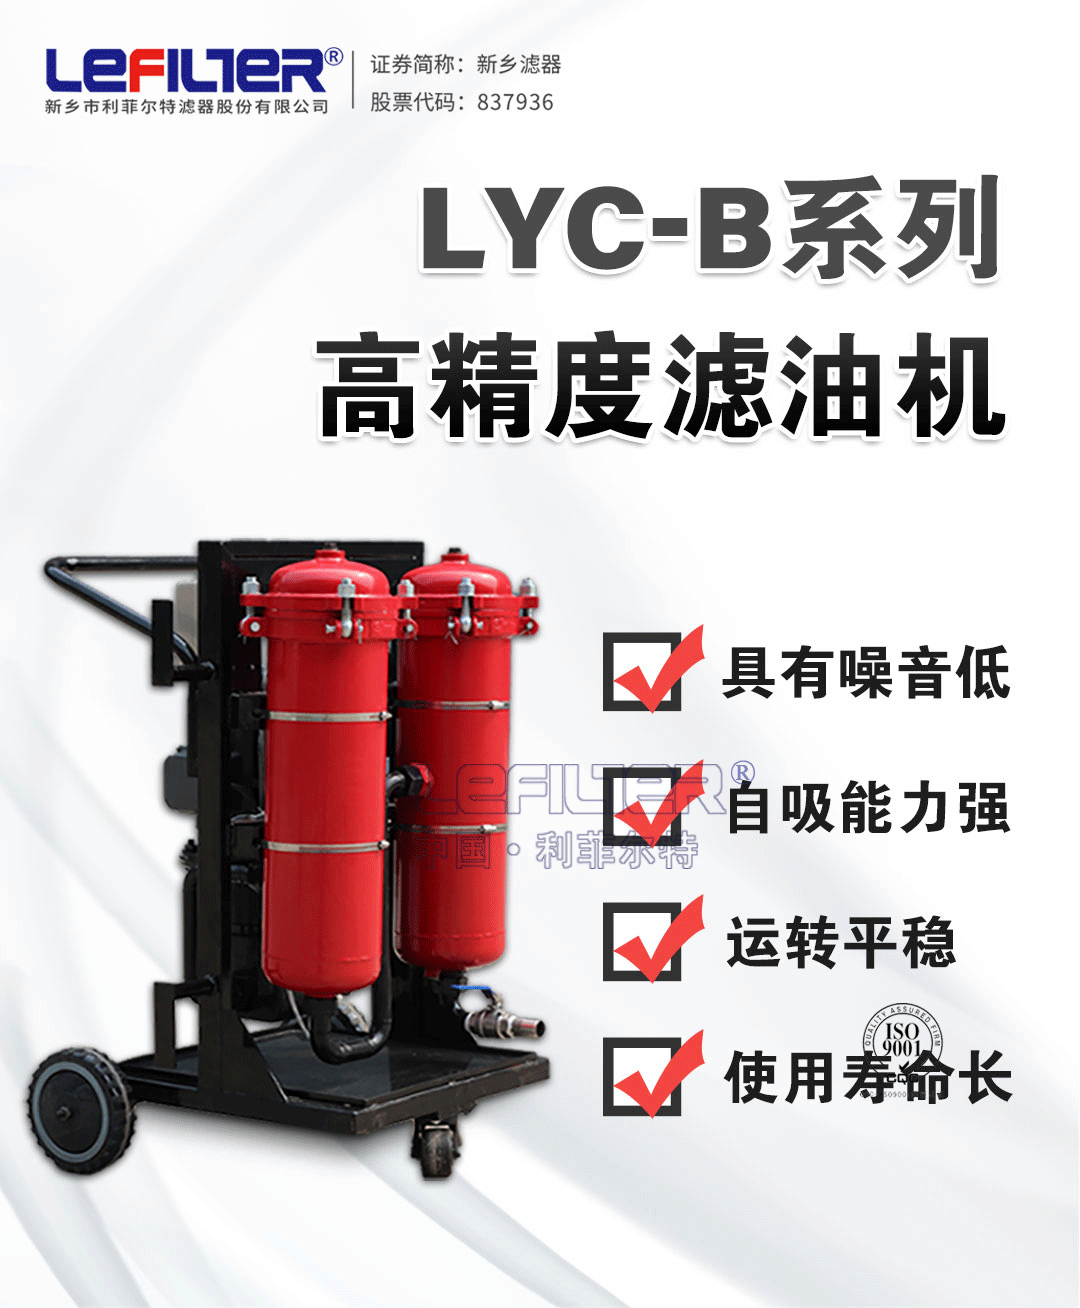 LYC-B高精度滤油机_01